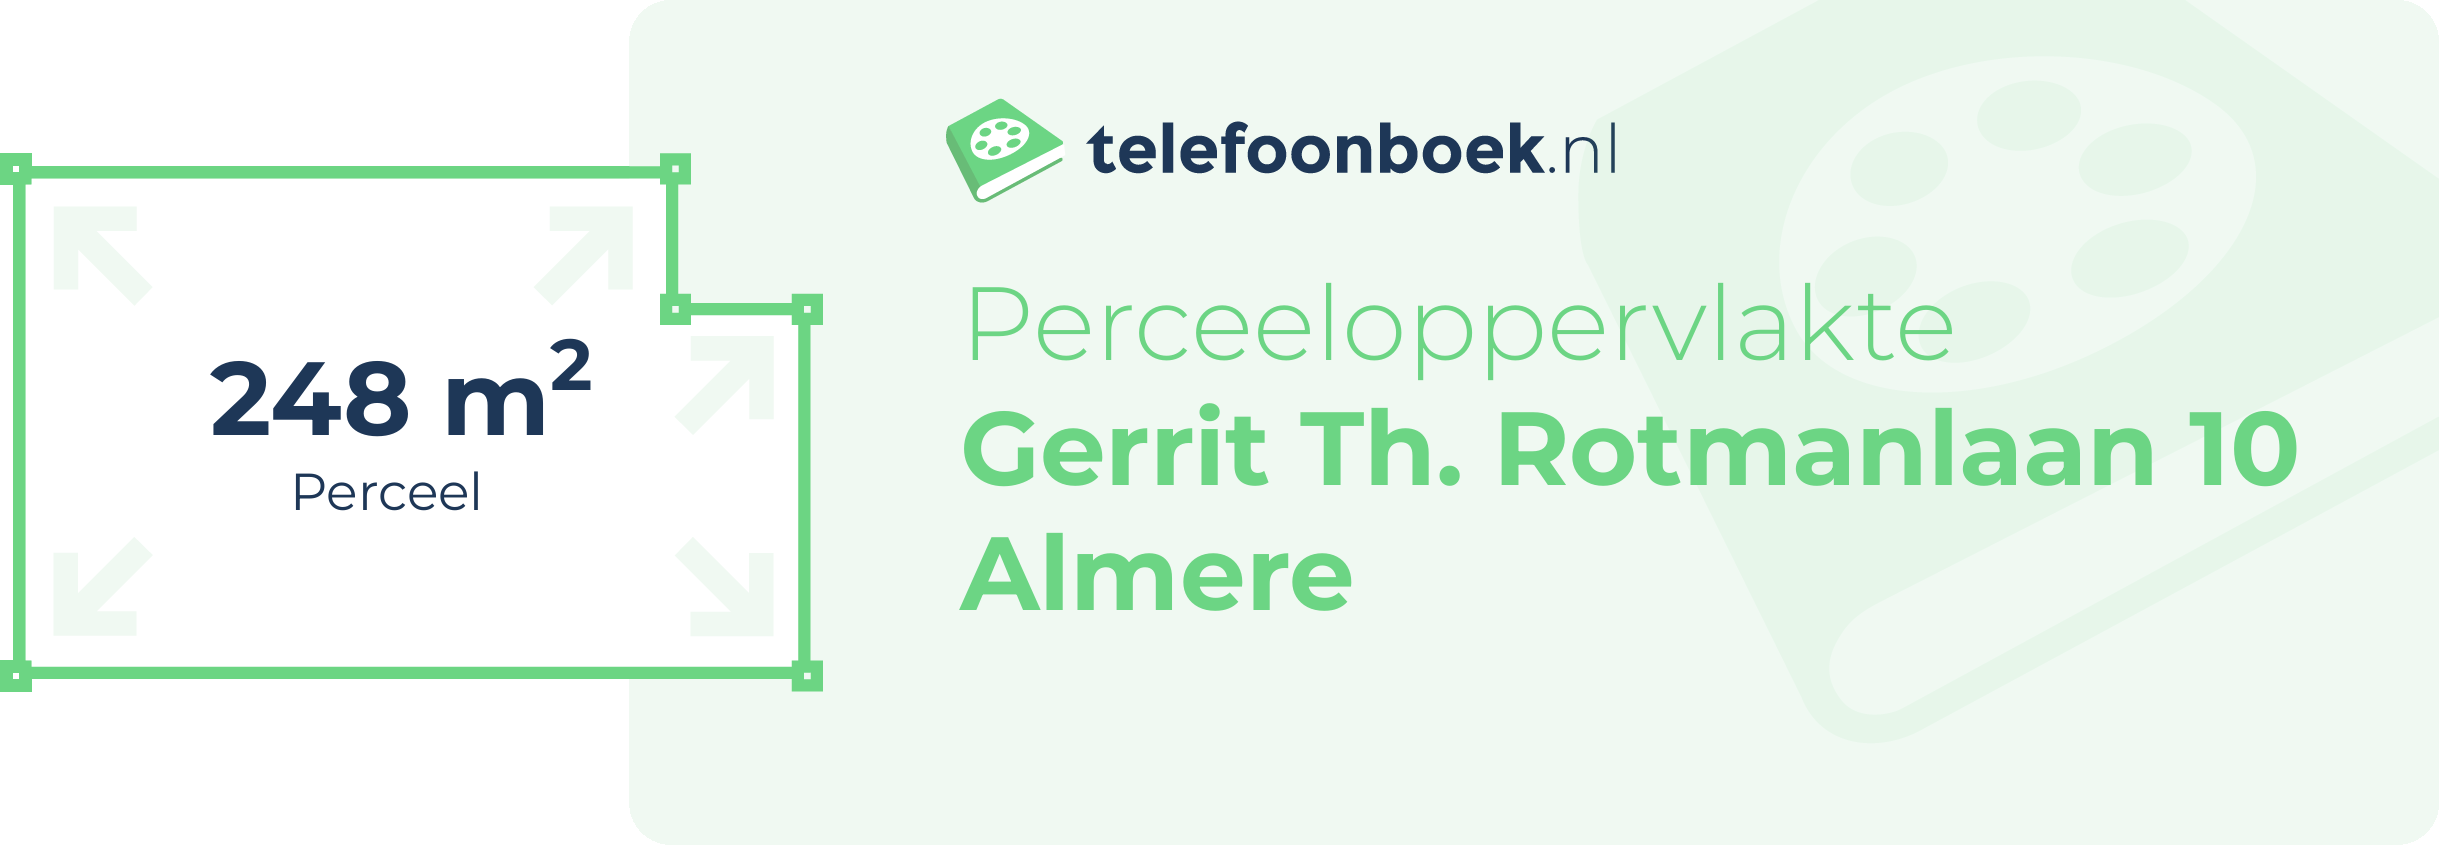 Perceeloppervlakte Gerrit Th. Rotmanlaan 10 Almere